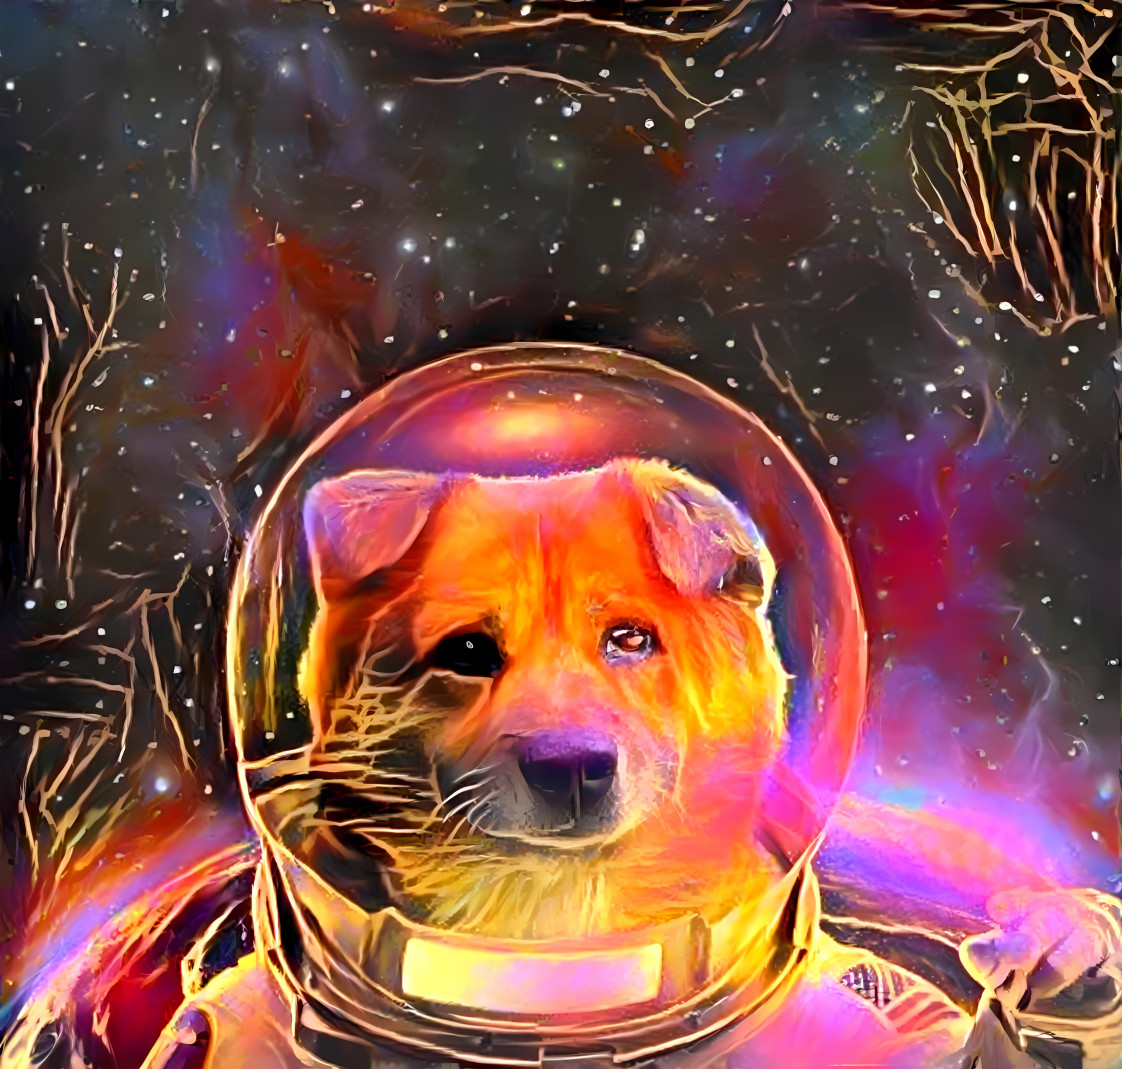 Astrodog